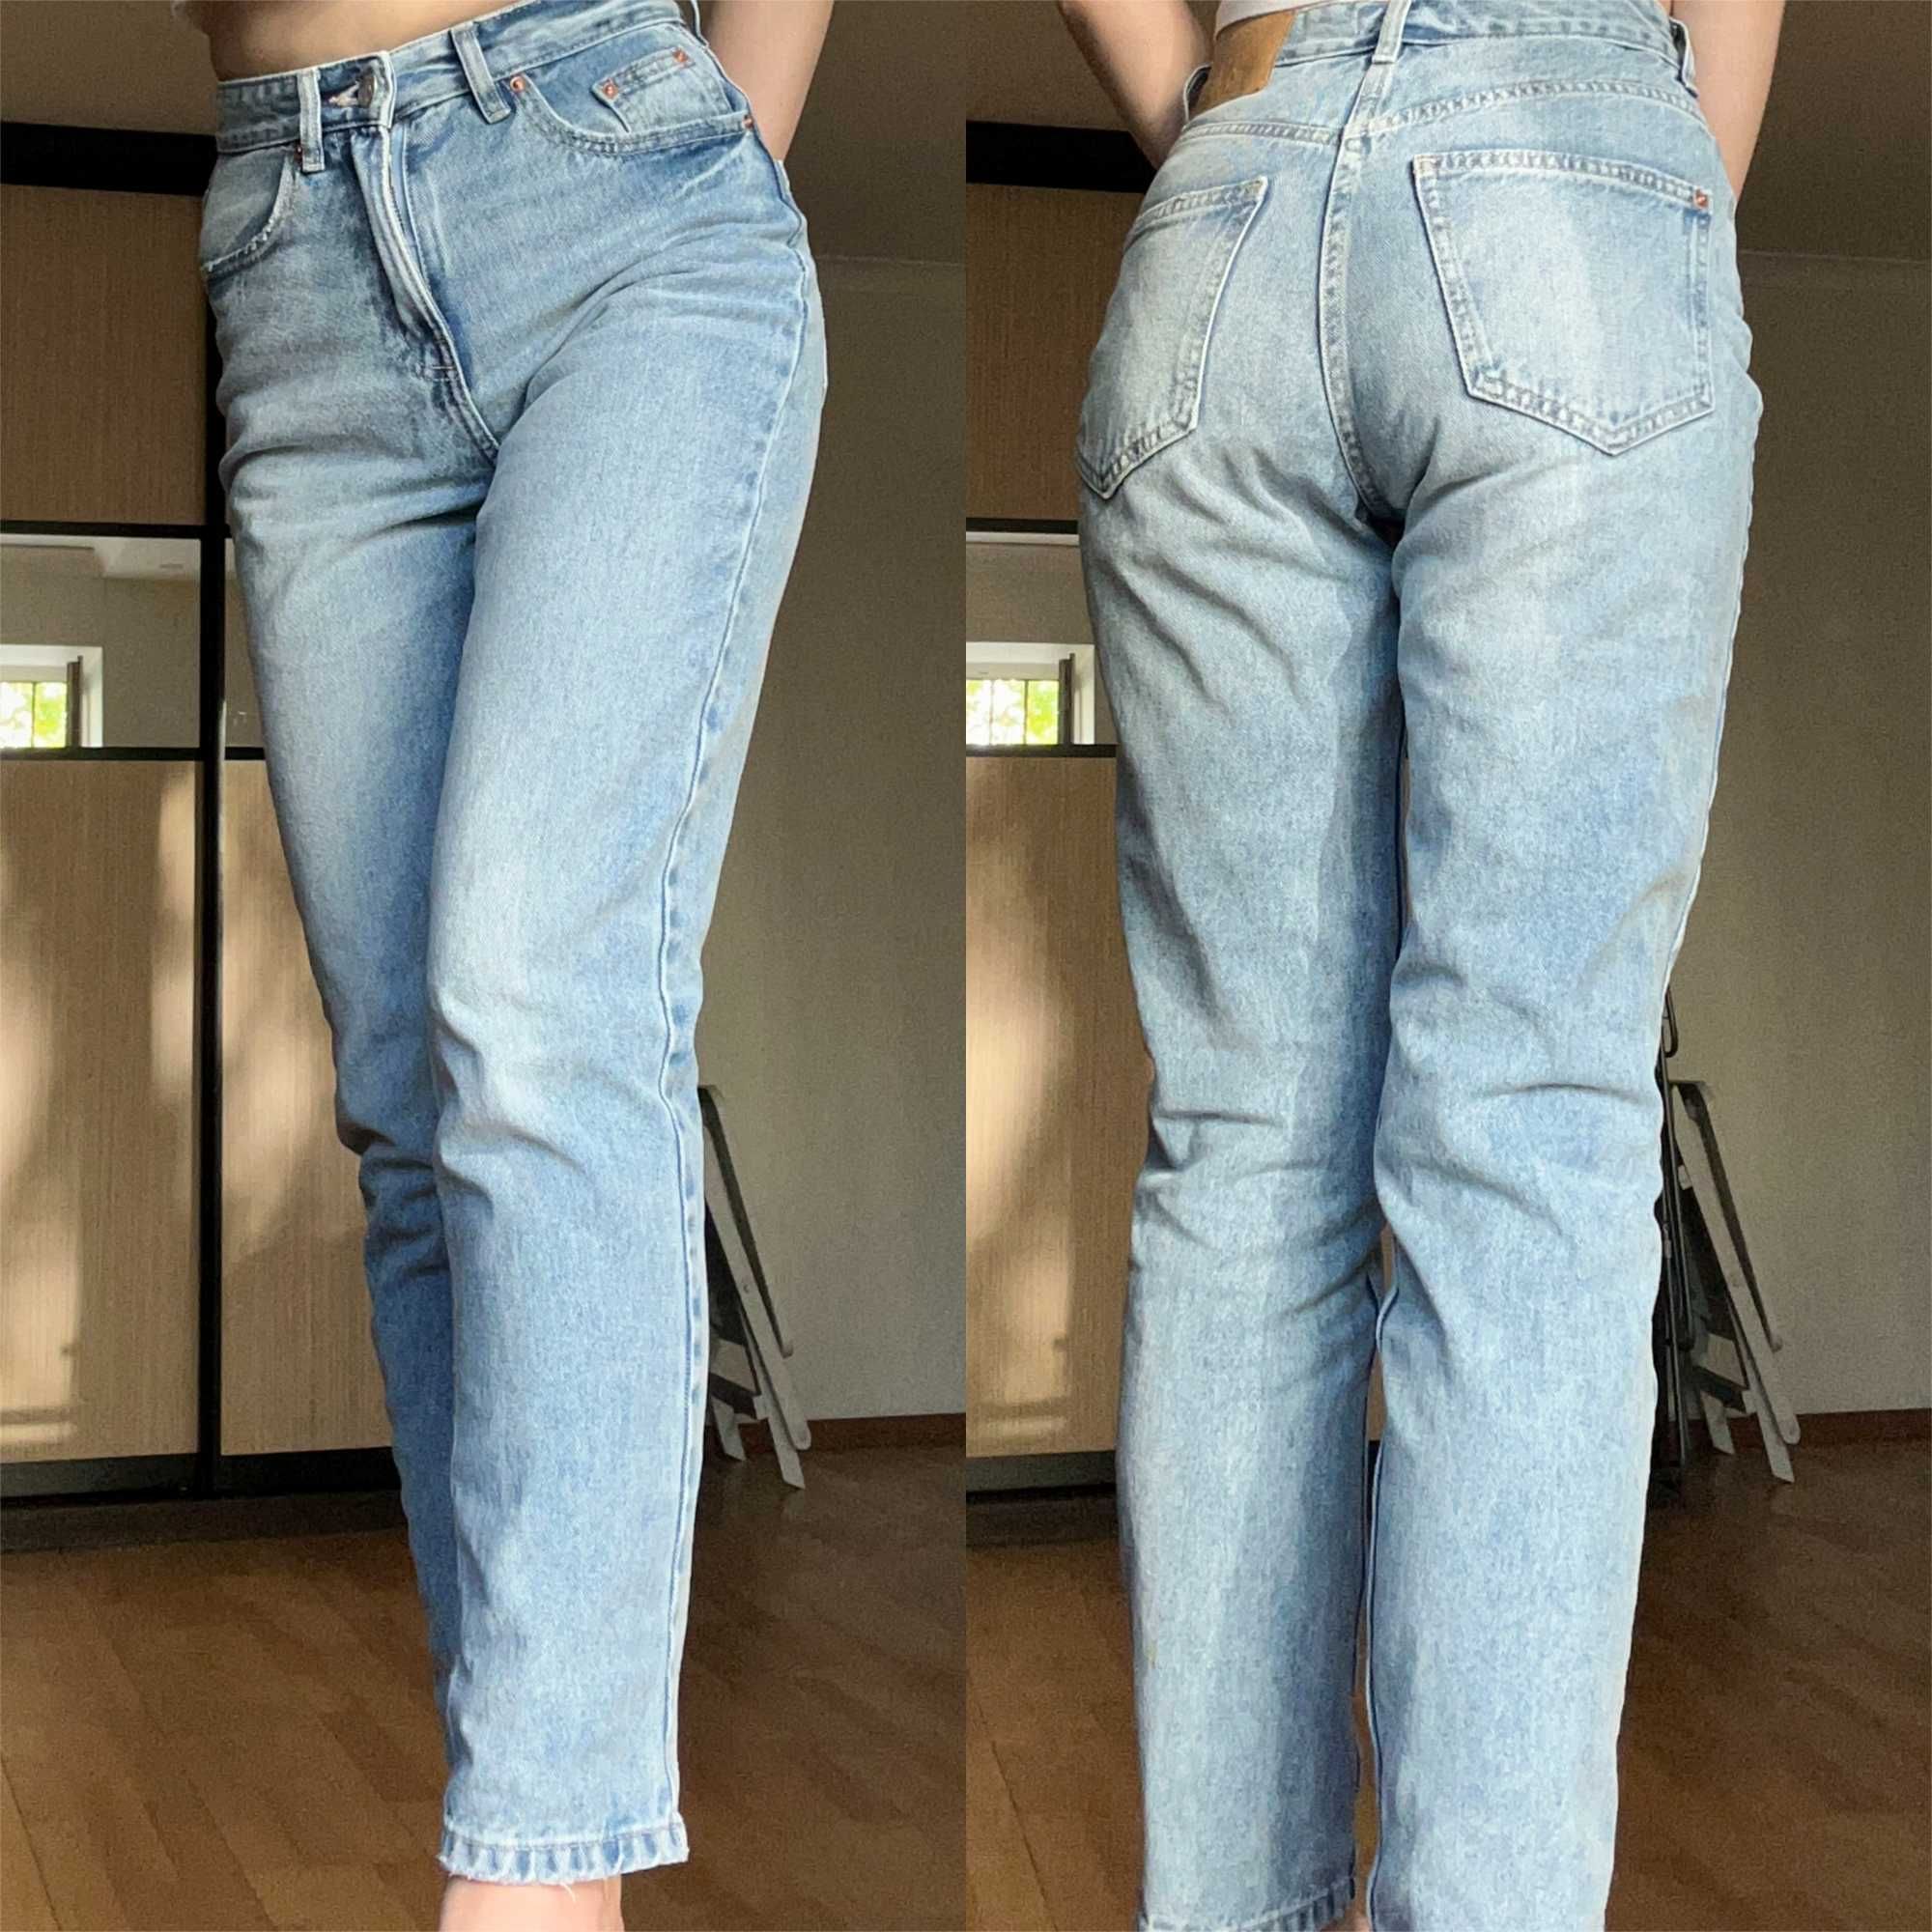 Новые джинсы Sinsay, Terranova (размер 32) Mom fit и Skinni